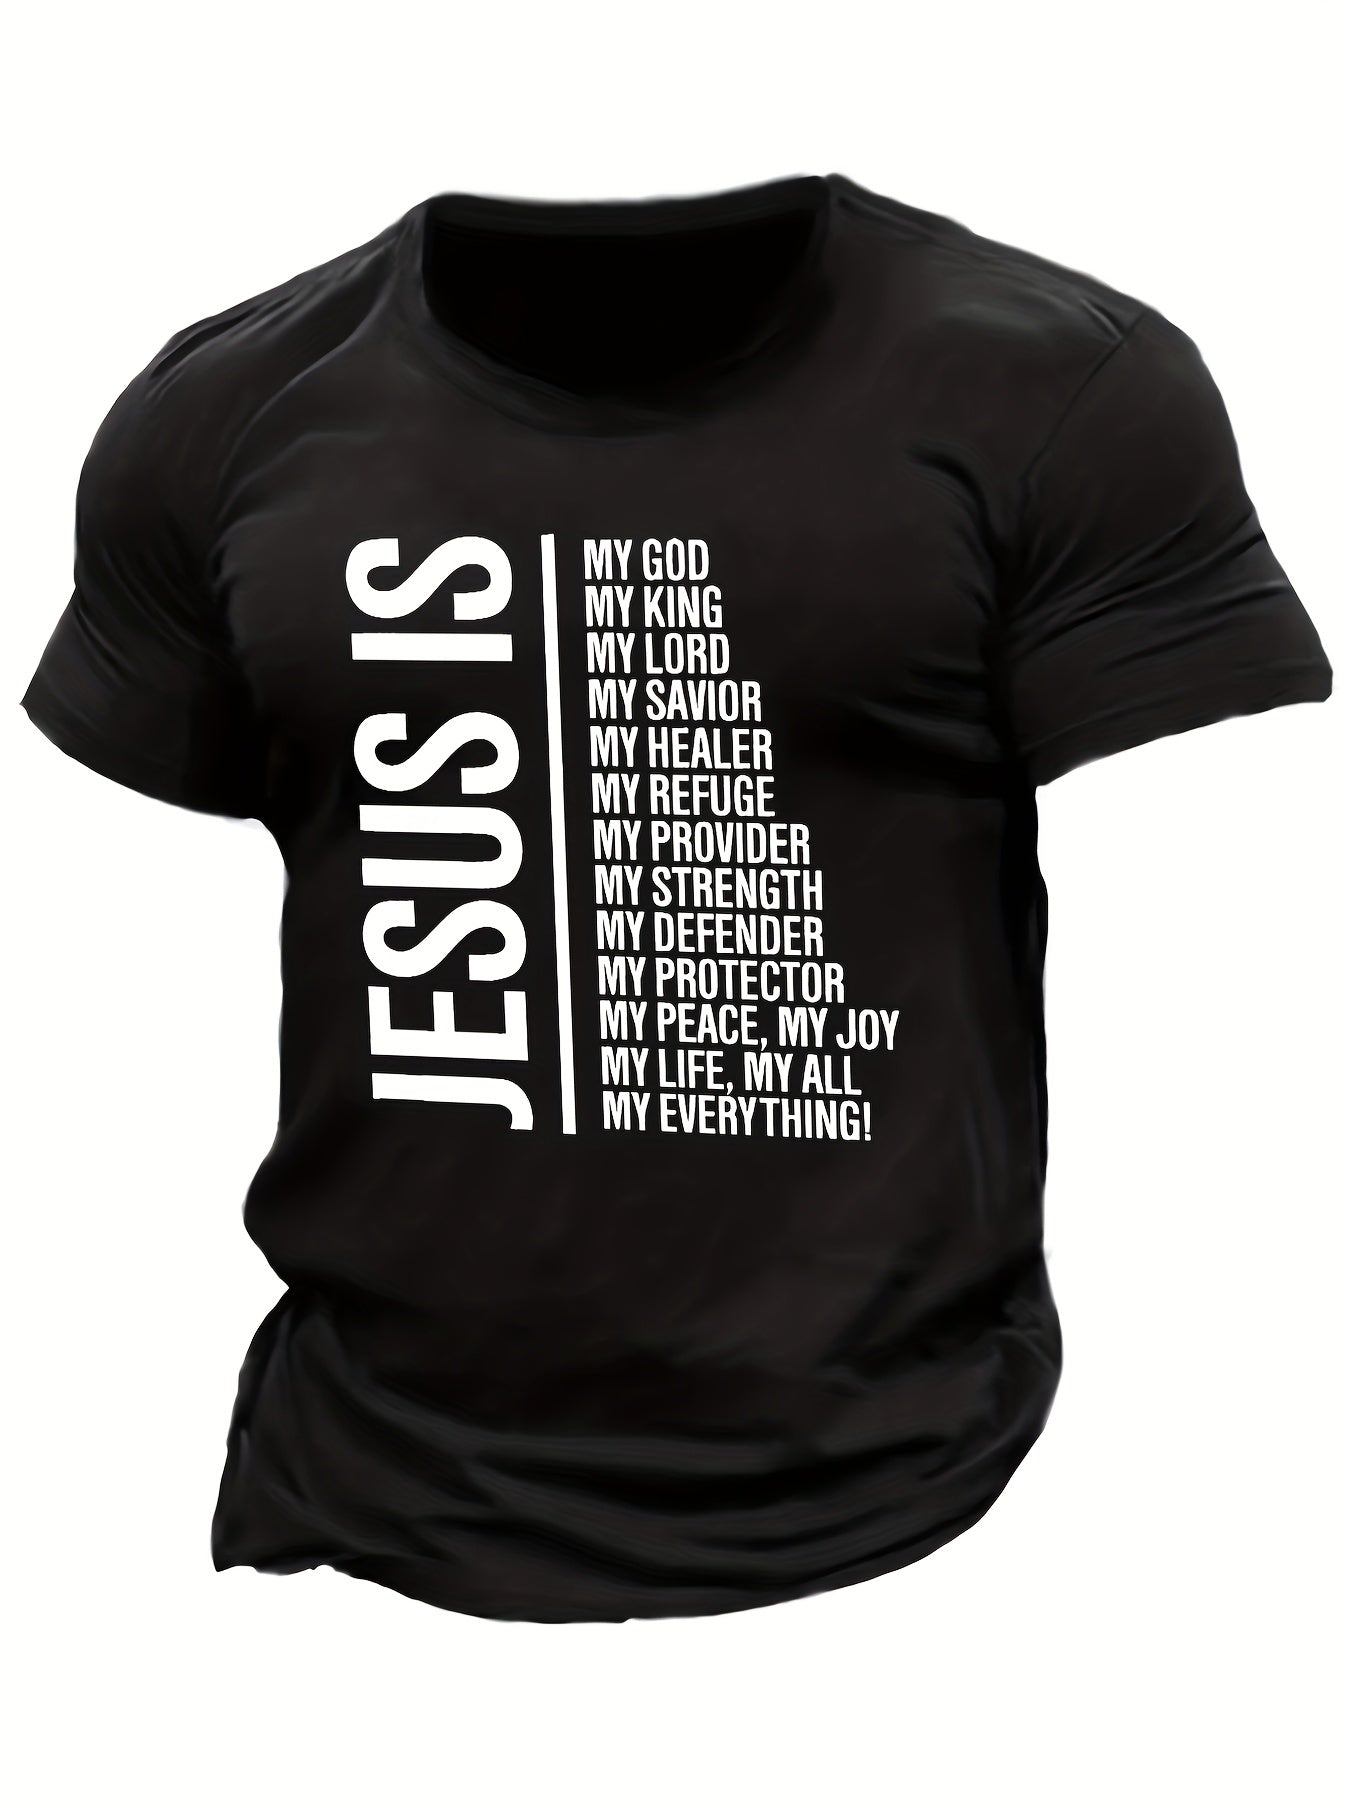 Jesus Is My Everything (2) Plus Size Men's Christian T-Shirt claimedbygoddesigns